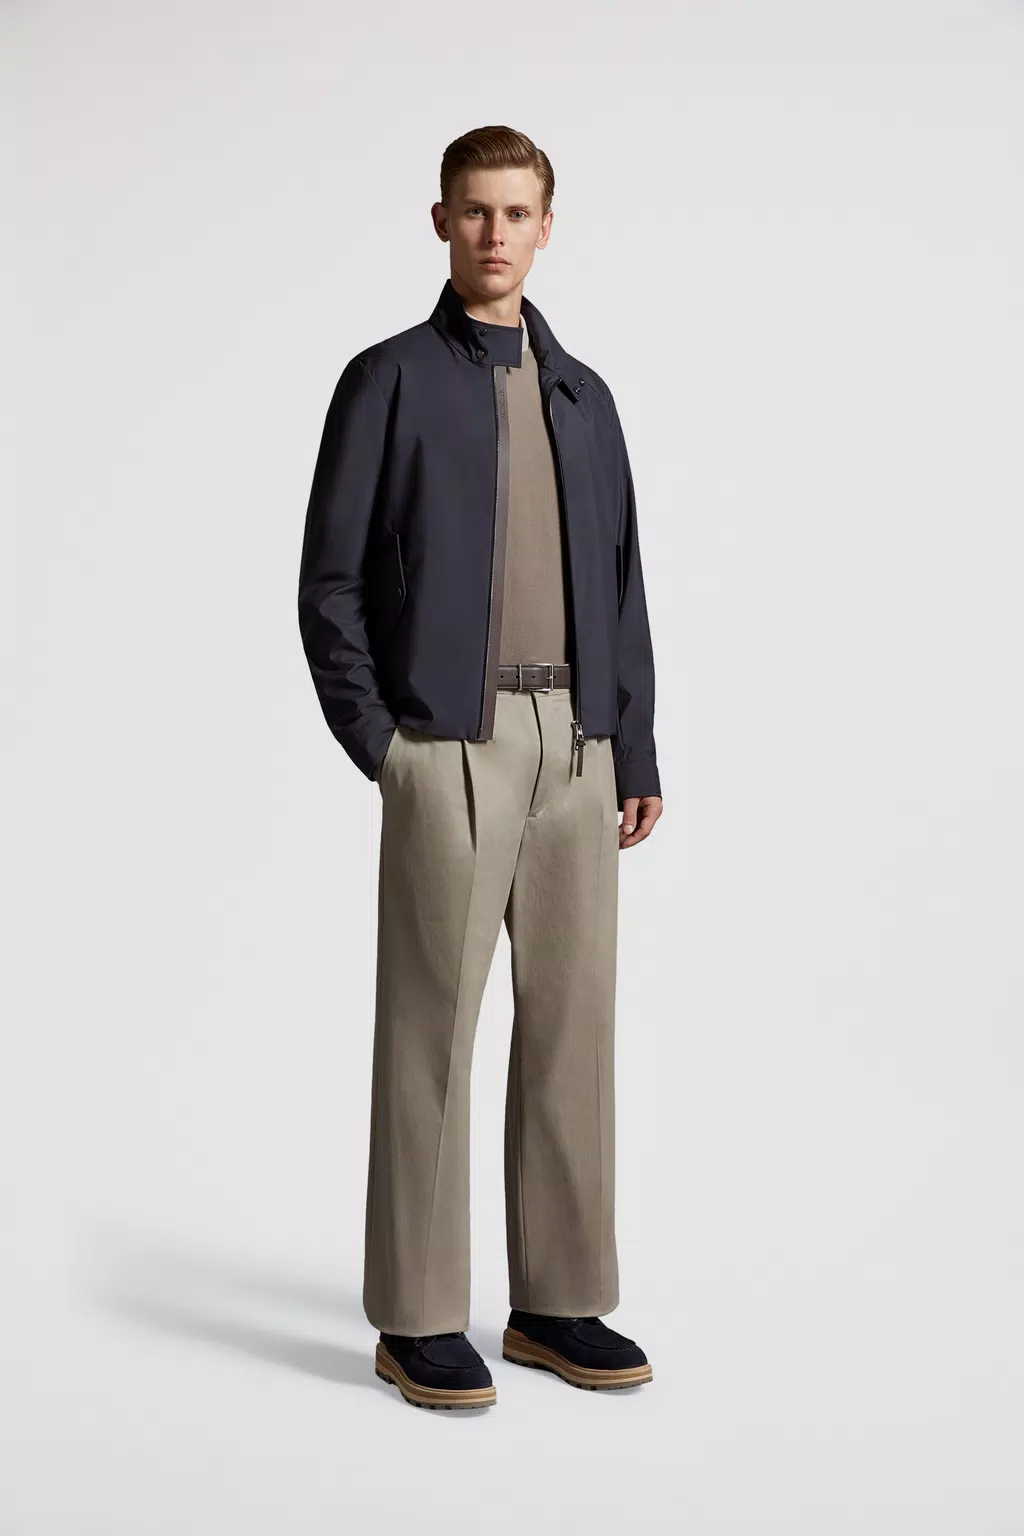 Coats & Jackets for Men - Outerwear